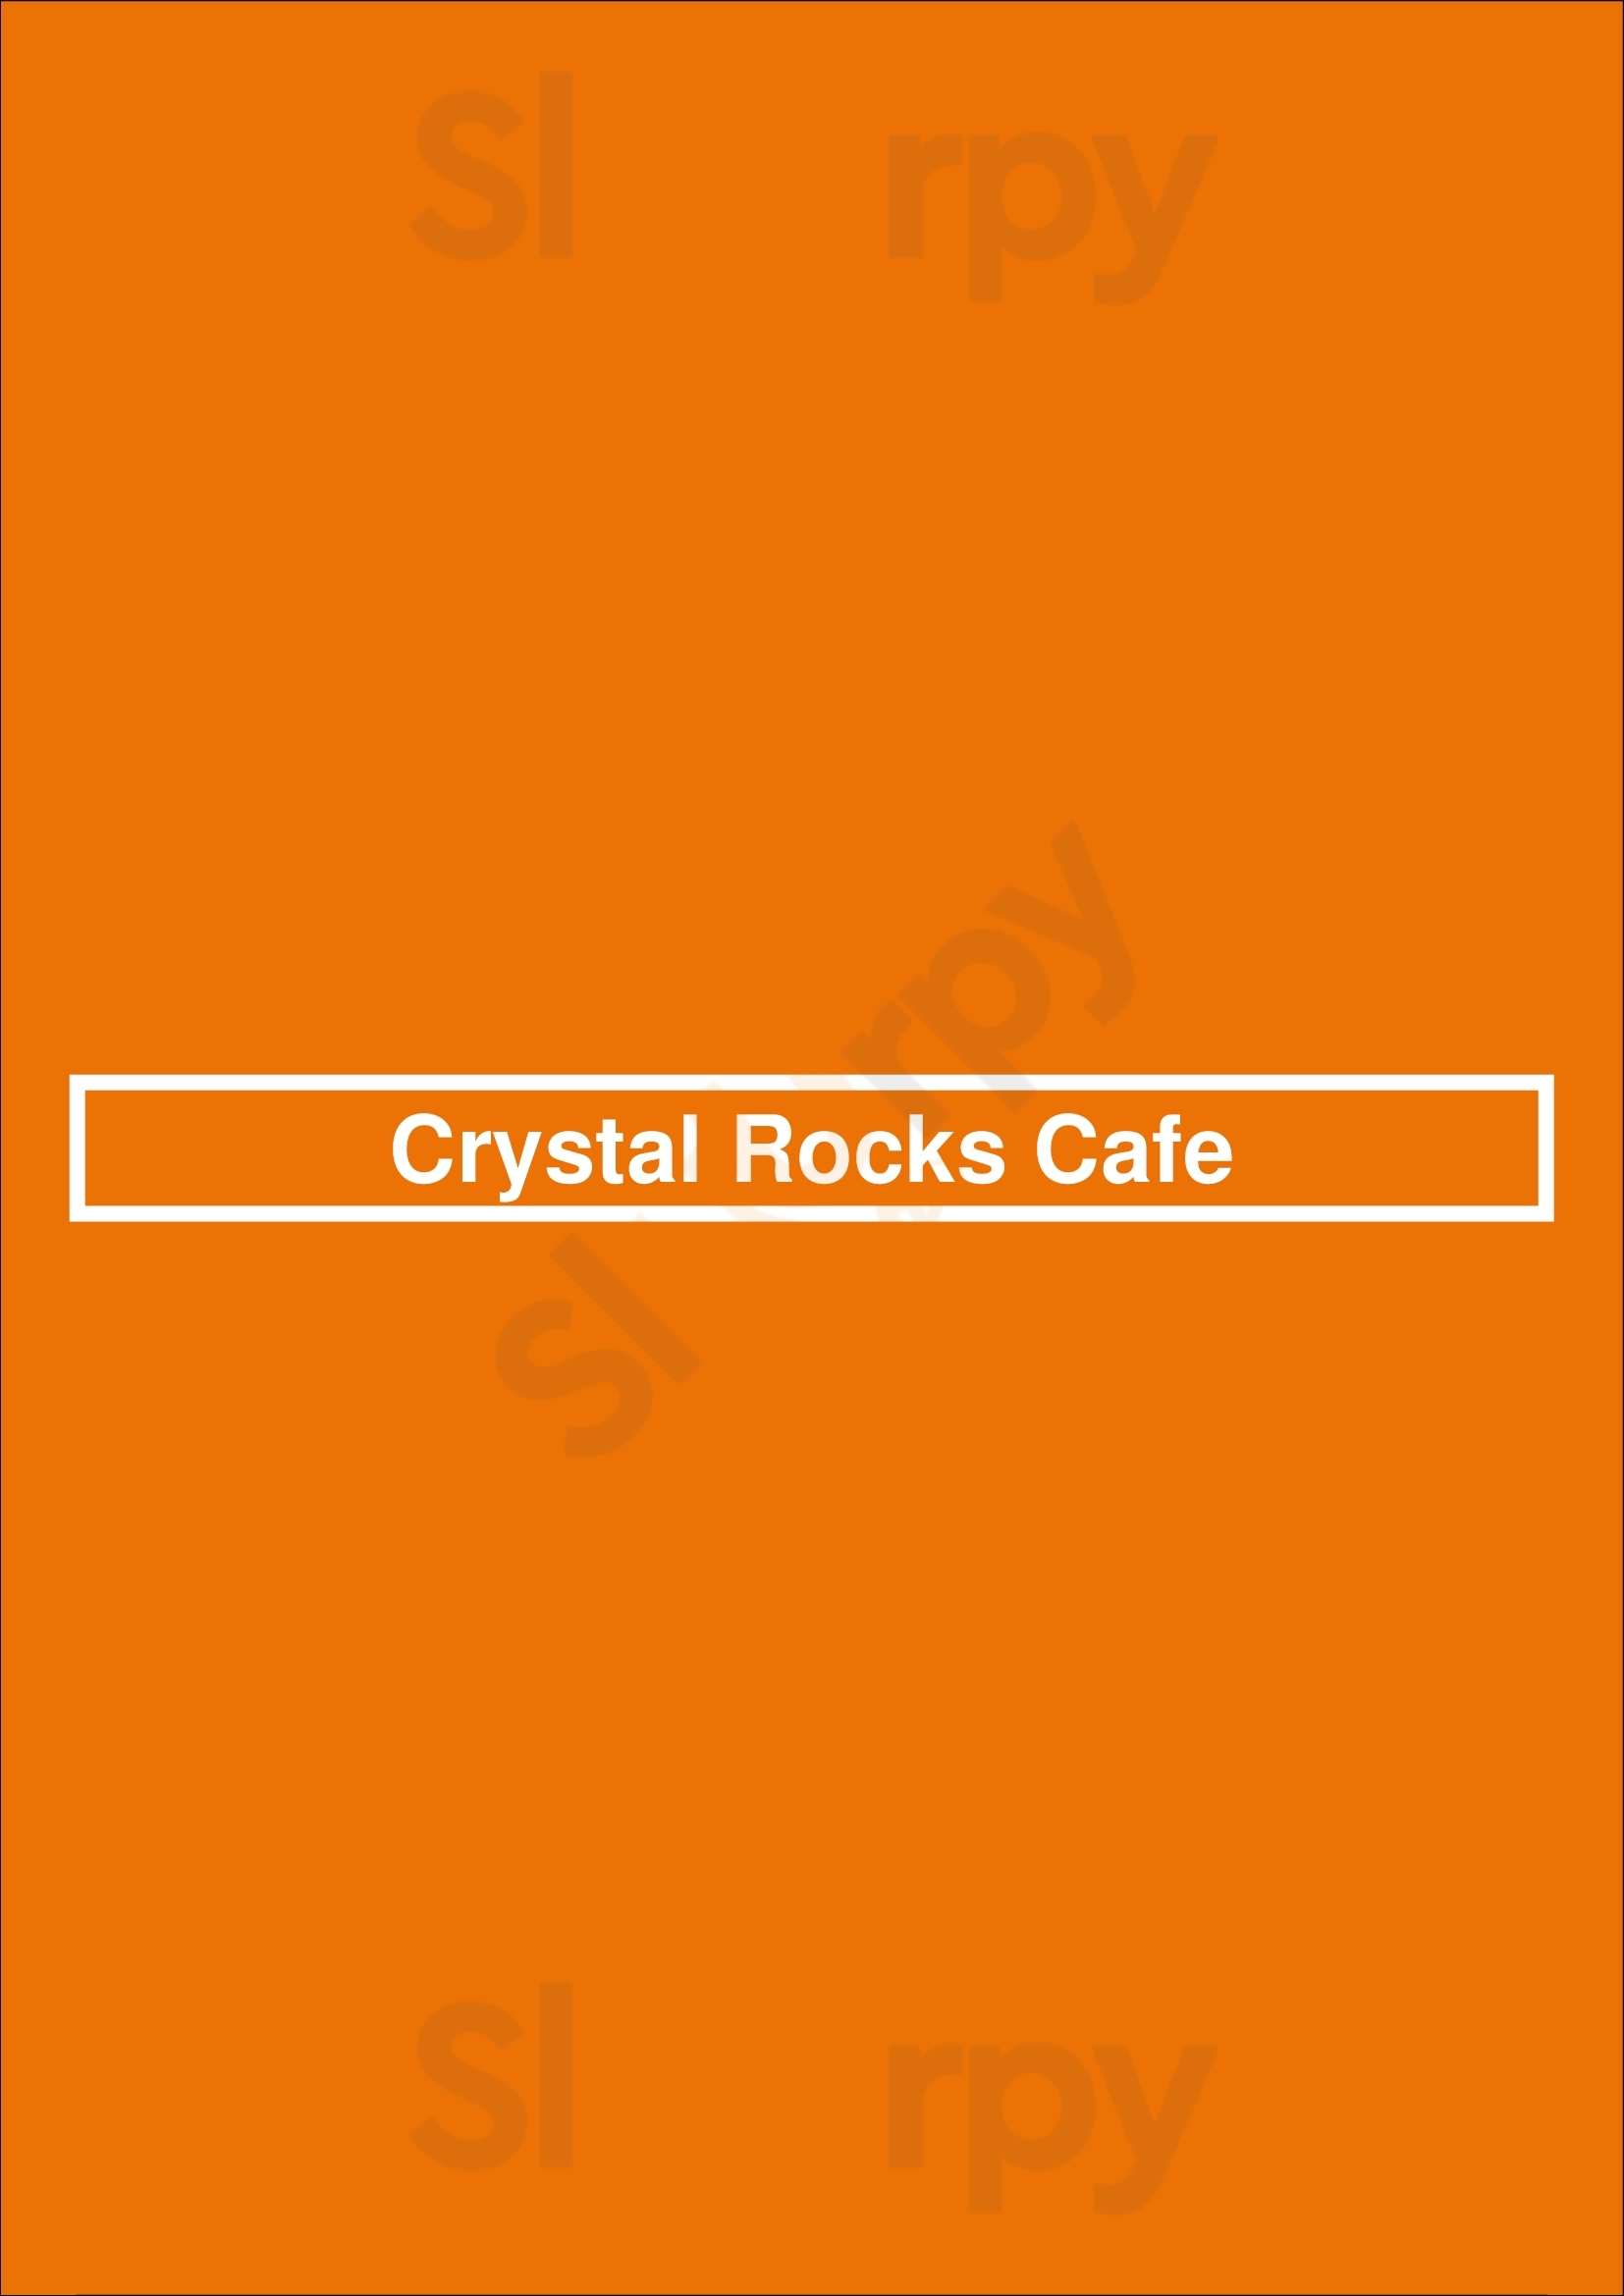 Crystal Rocks Cafe Croydon Menu - 1